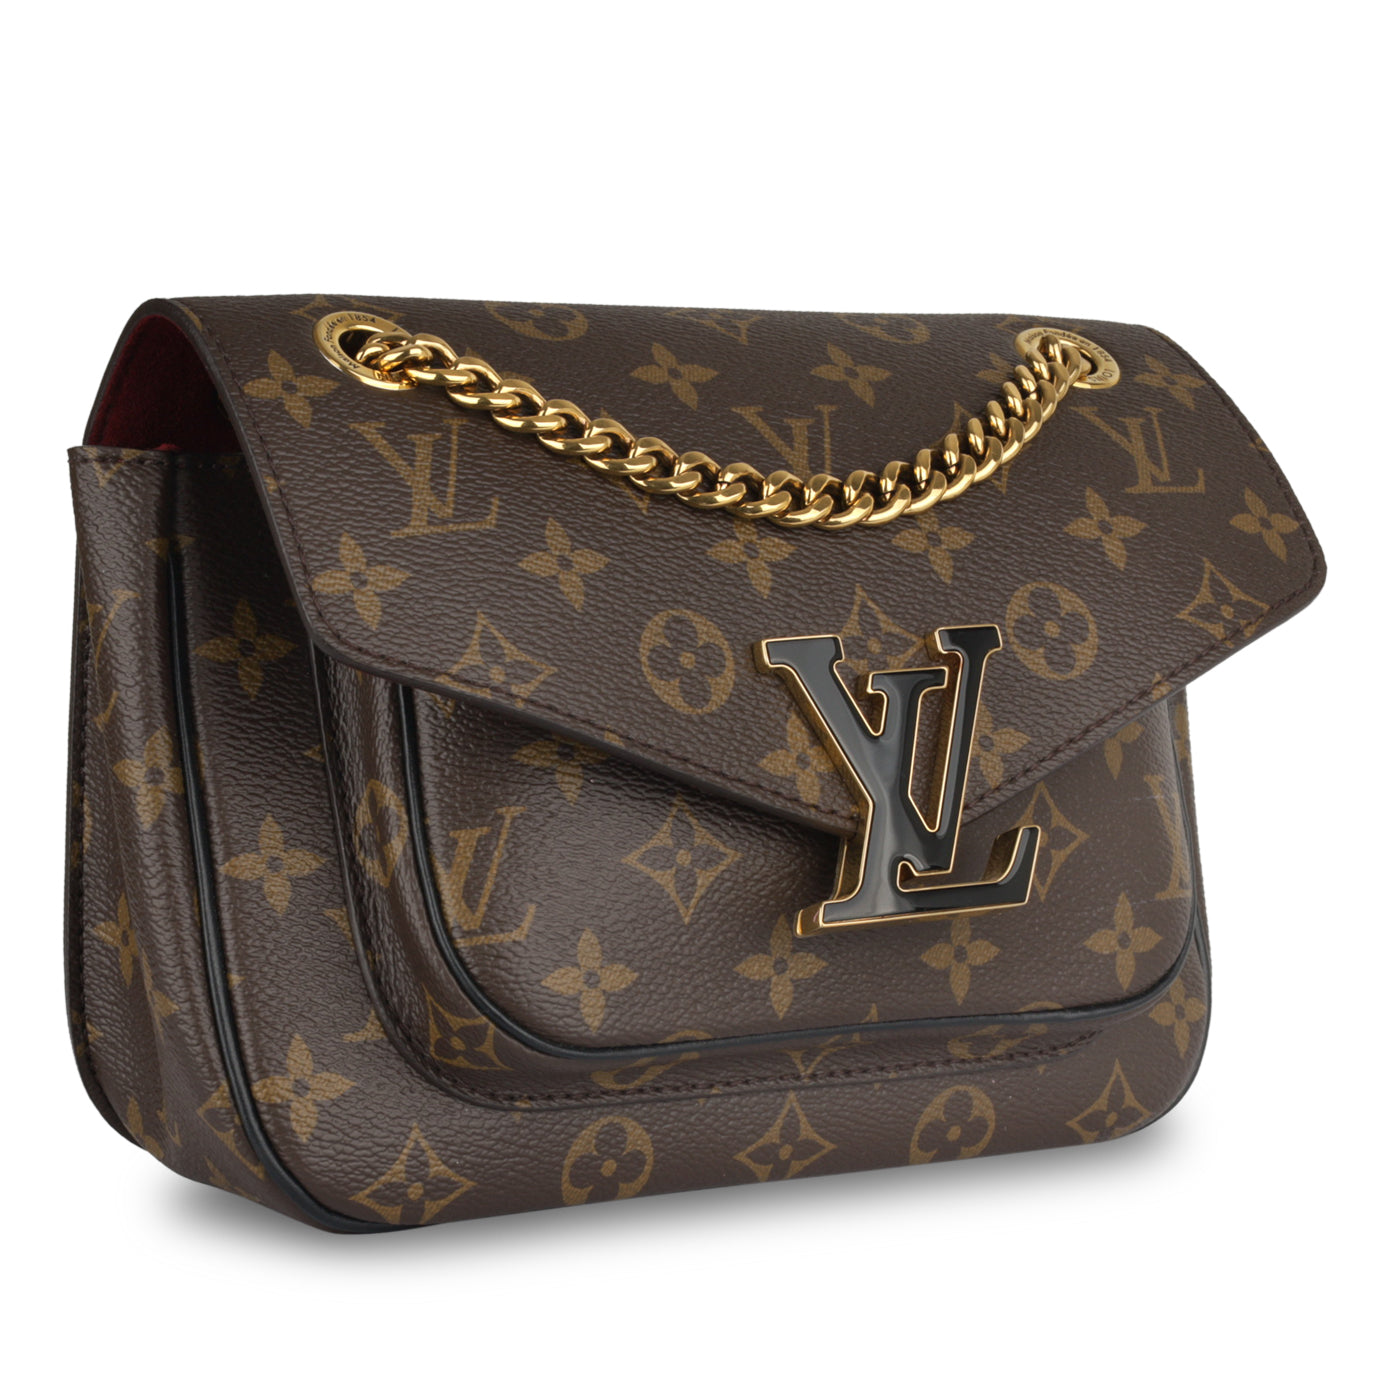 Louis Vuitton Passy - LVLENKA Luxury Consignment